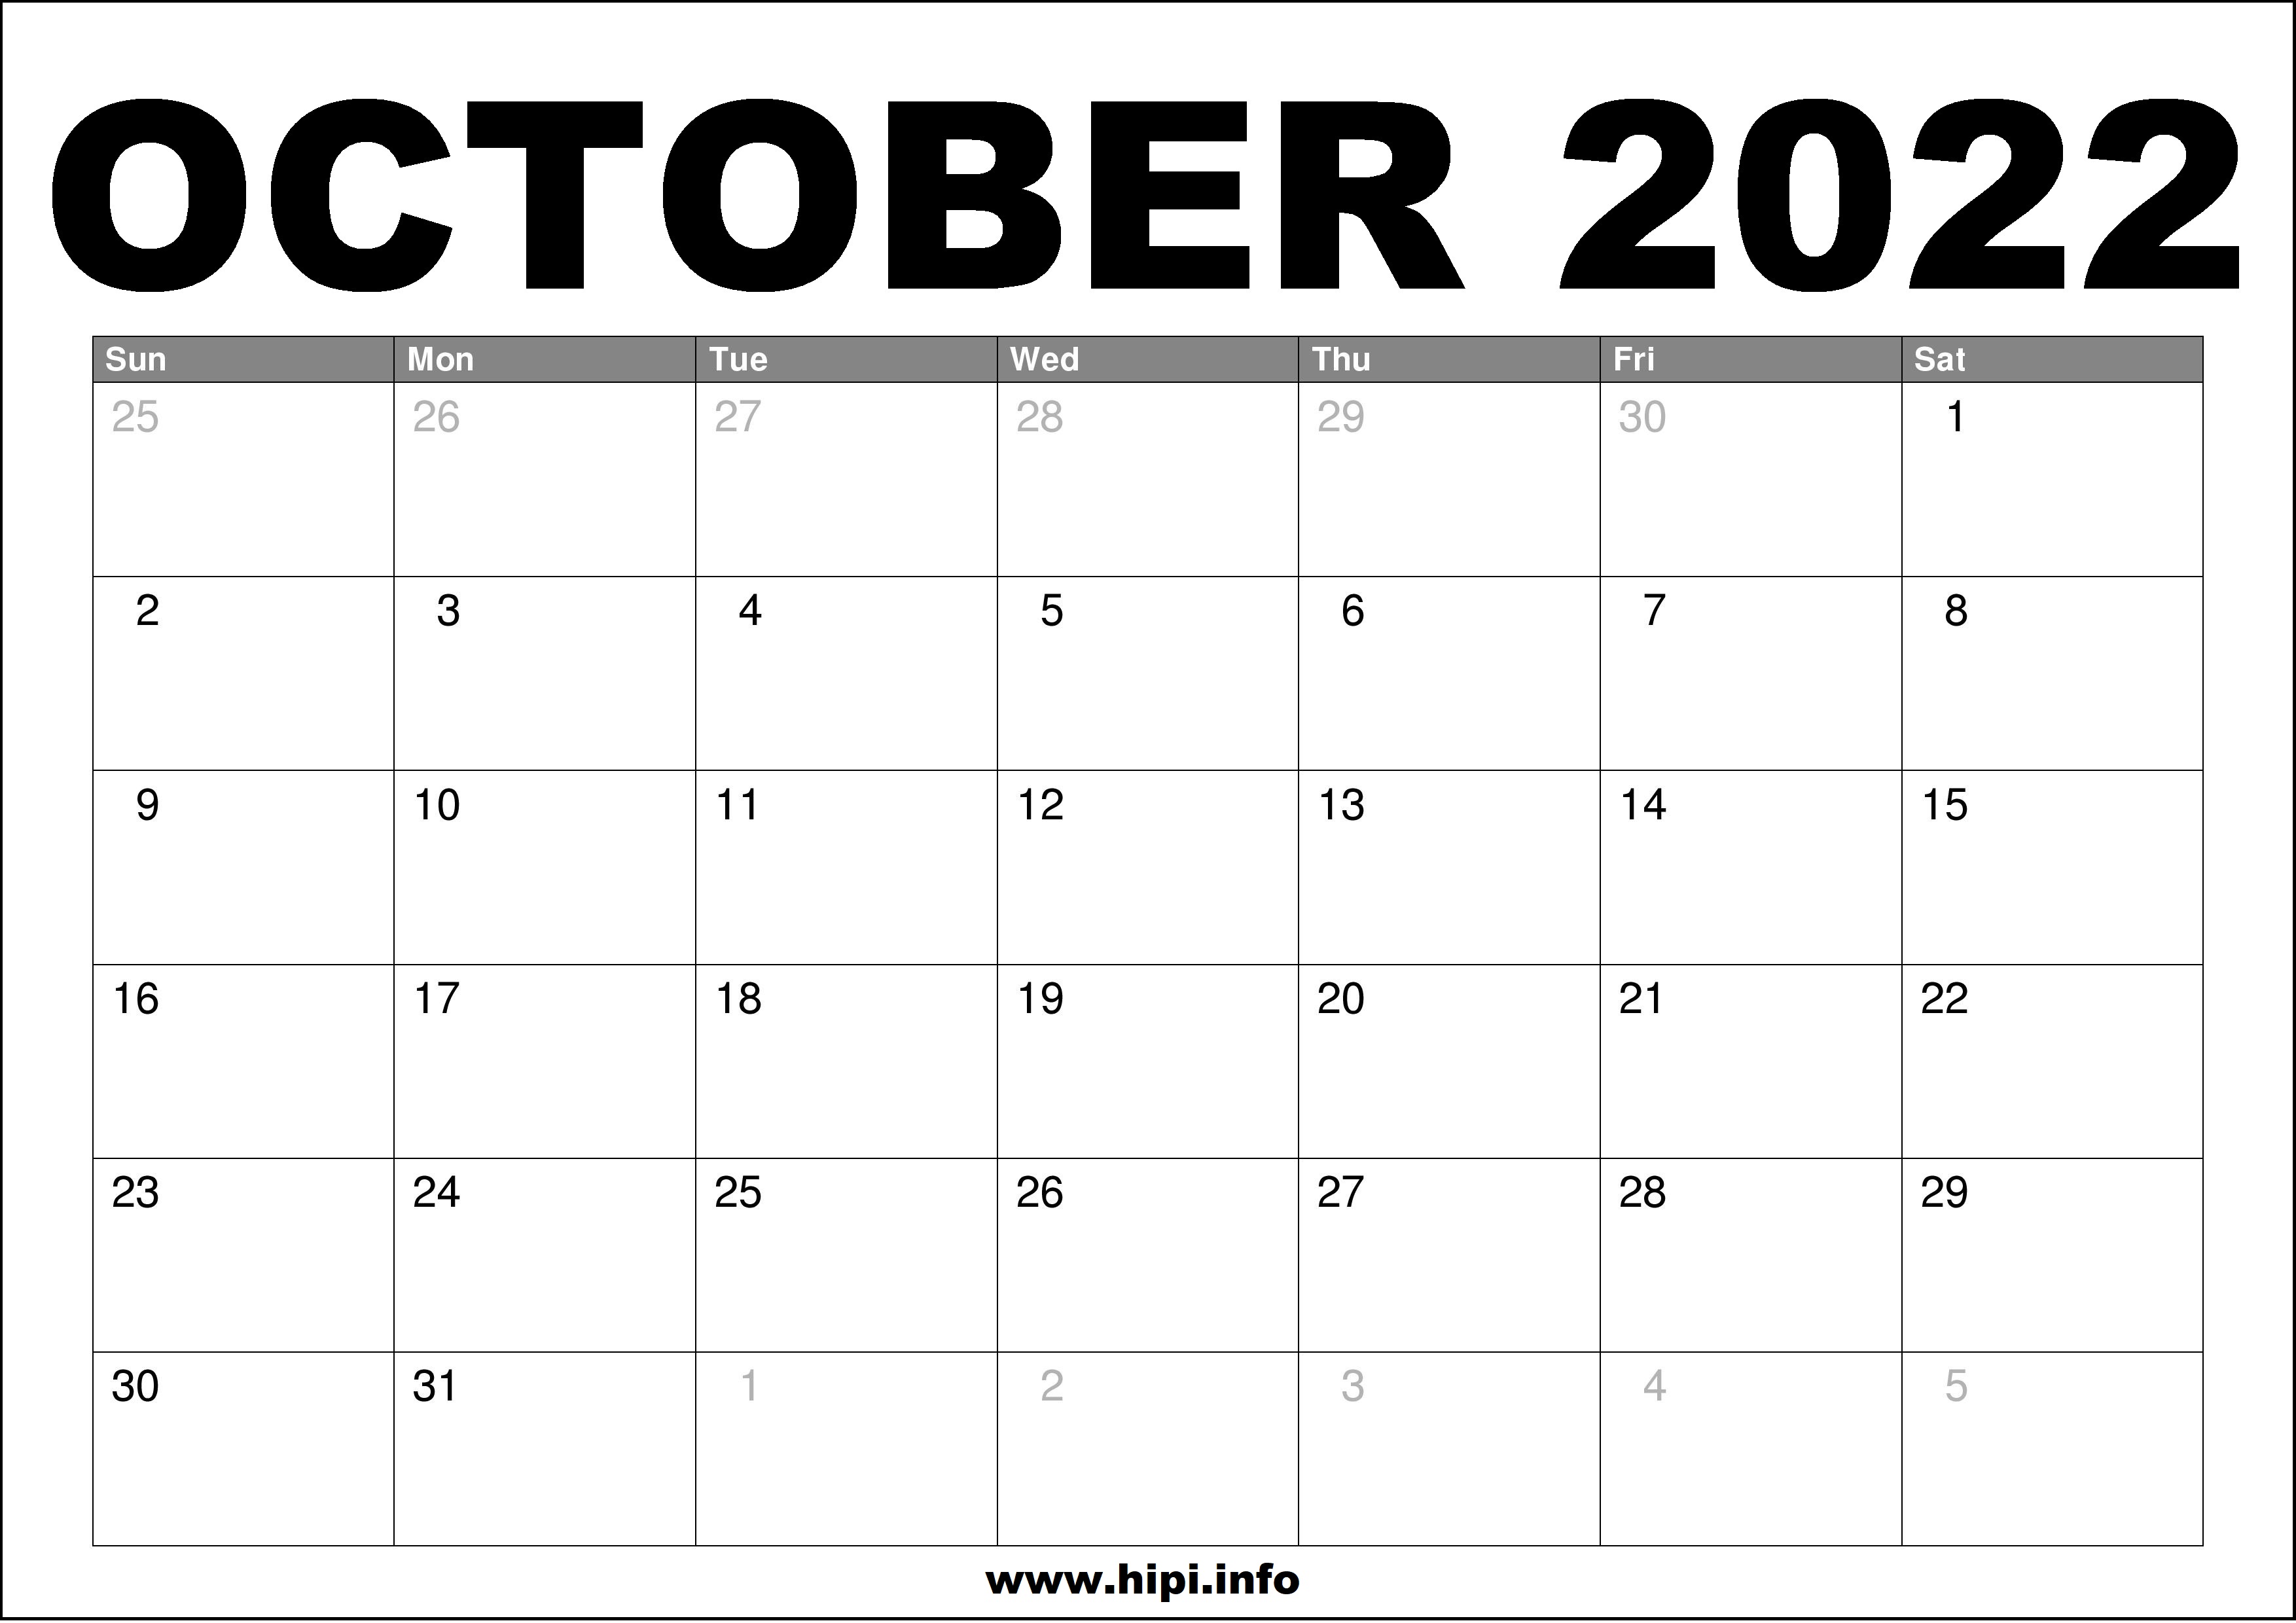 October 2022 Calendar Free Printable October 2022 Calendar Printable Free - Hipi.info | Calendars Printable Free